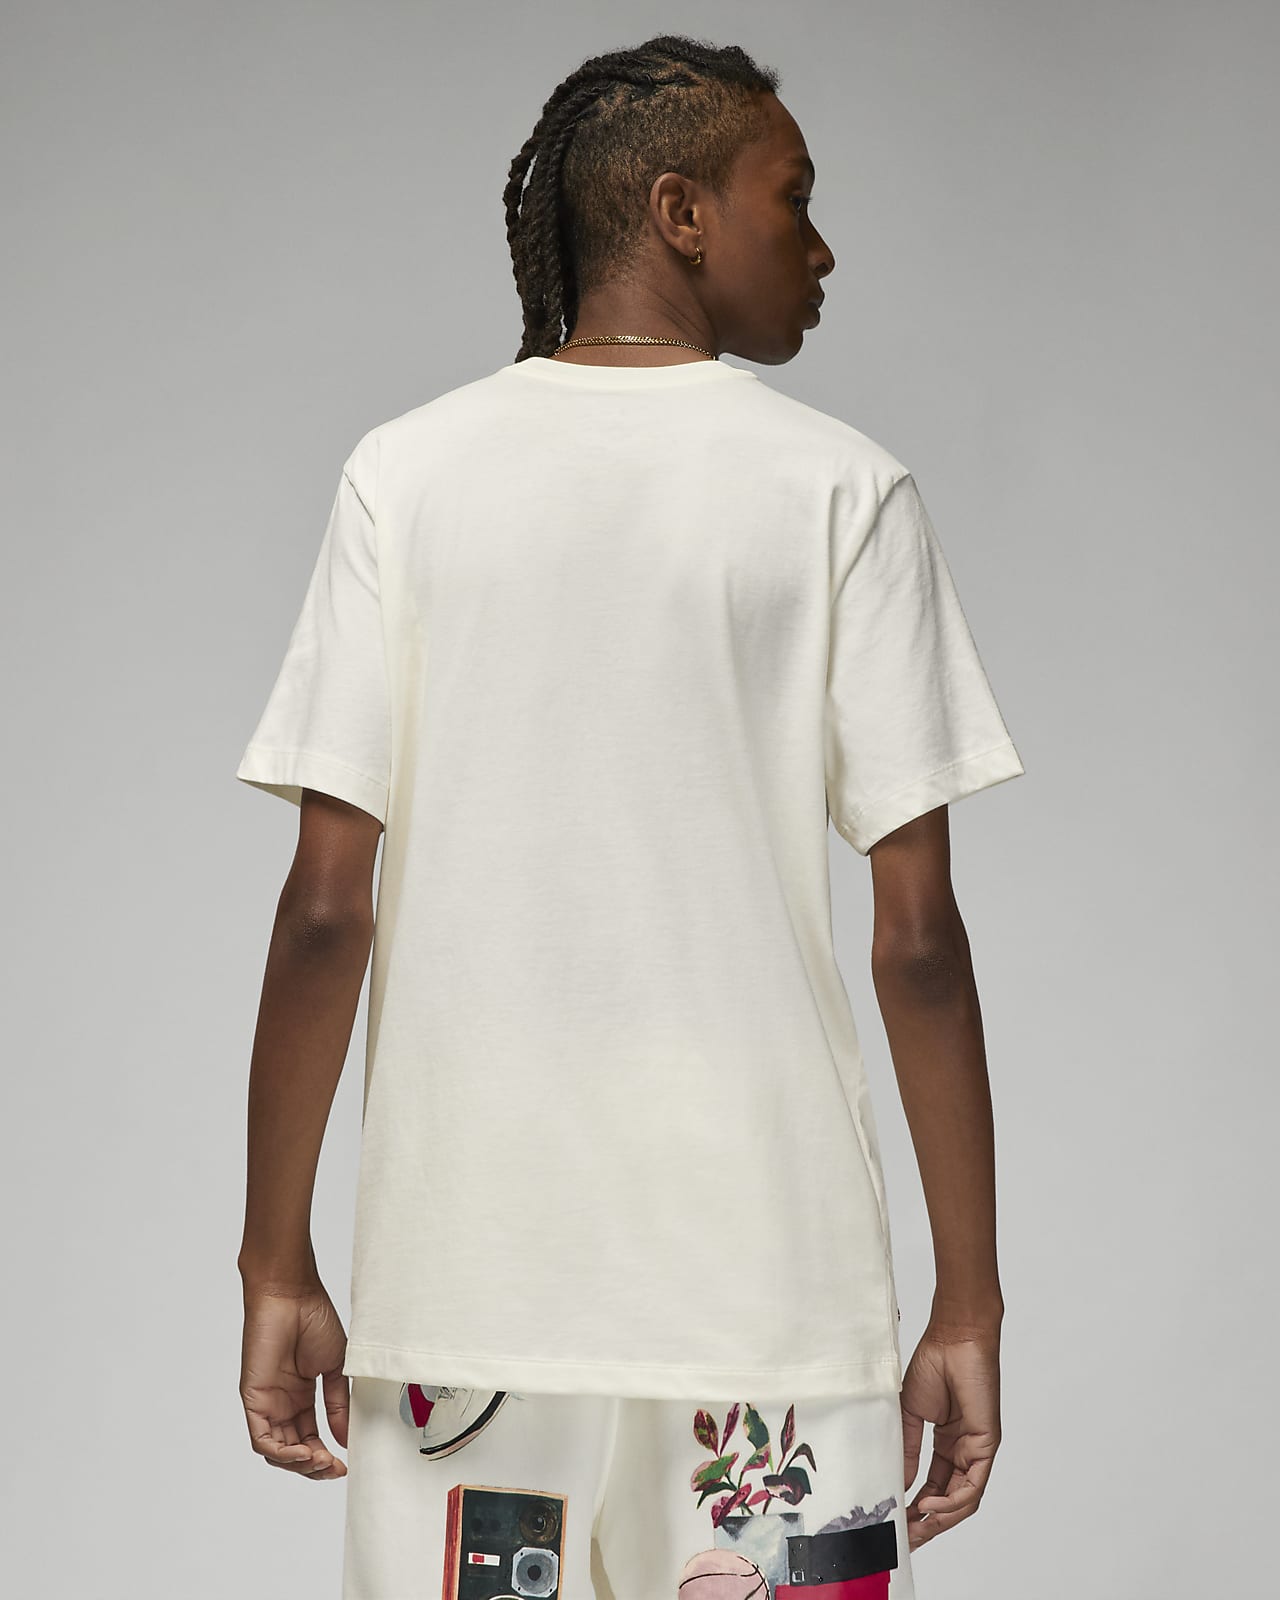 Jordan Artist Series by Jacob Rochester Men's T-Shirt. Nike LU